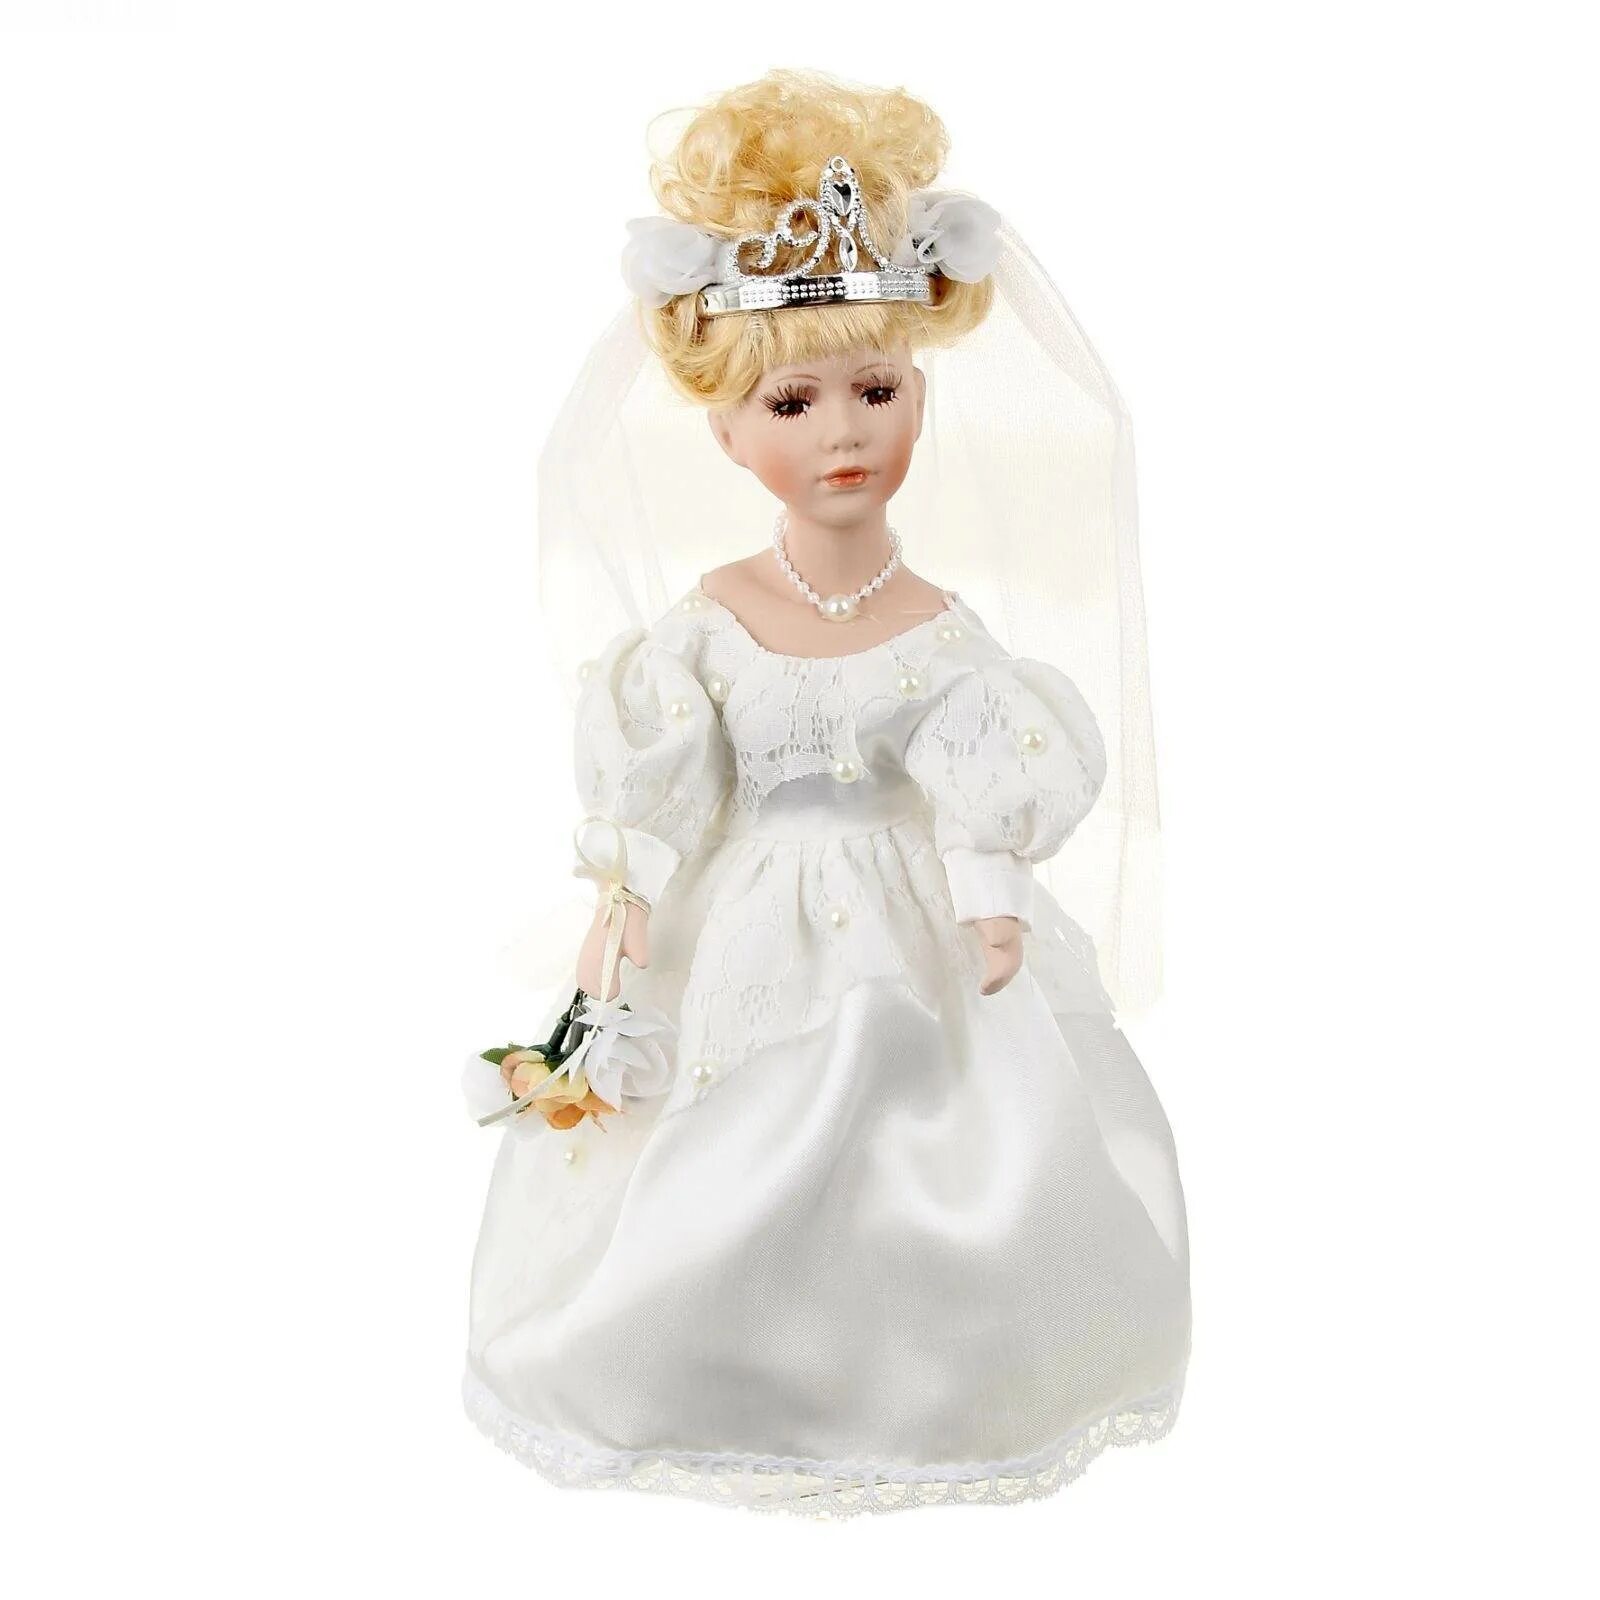 Купить куклу невесту. Фарфор куклы невесты. Фарфоровая кукла невеста. Фарфоровая кукла невеста 671802rm 45см. Фарфоровая кукла невеста 2000 года.